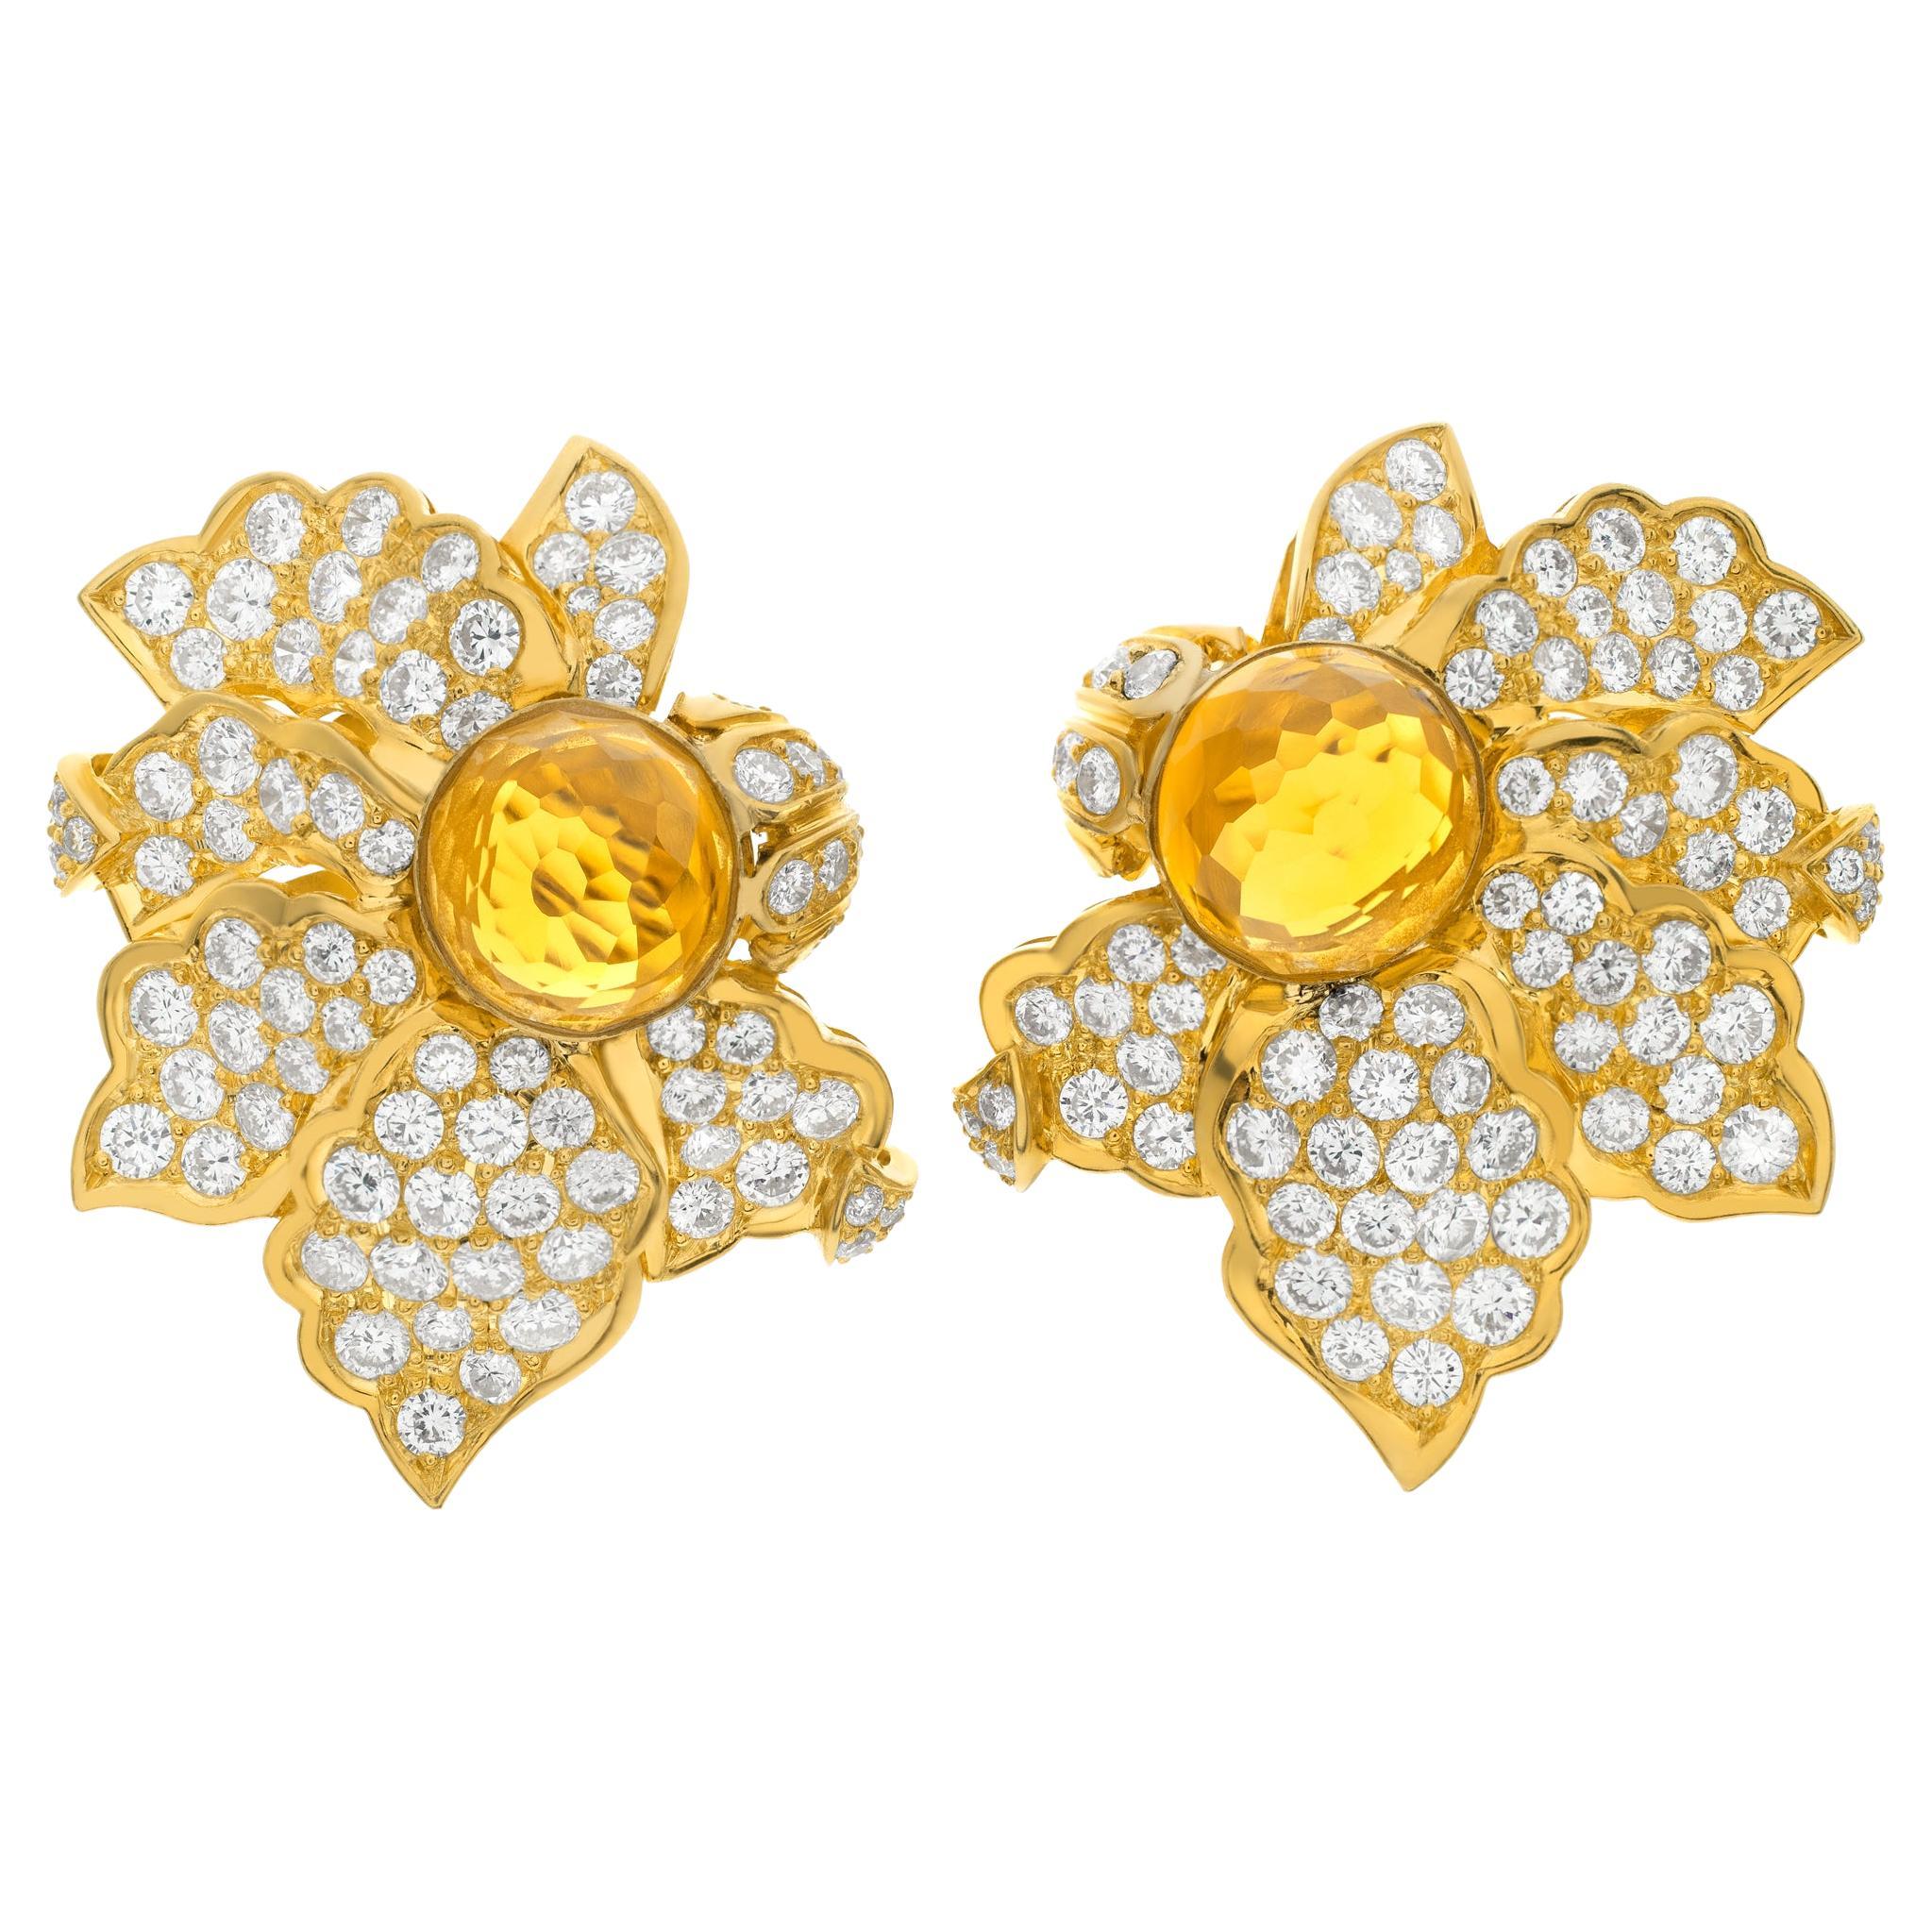 Yellow gold diamond flower earrings with Brazilian orange Citrine center